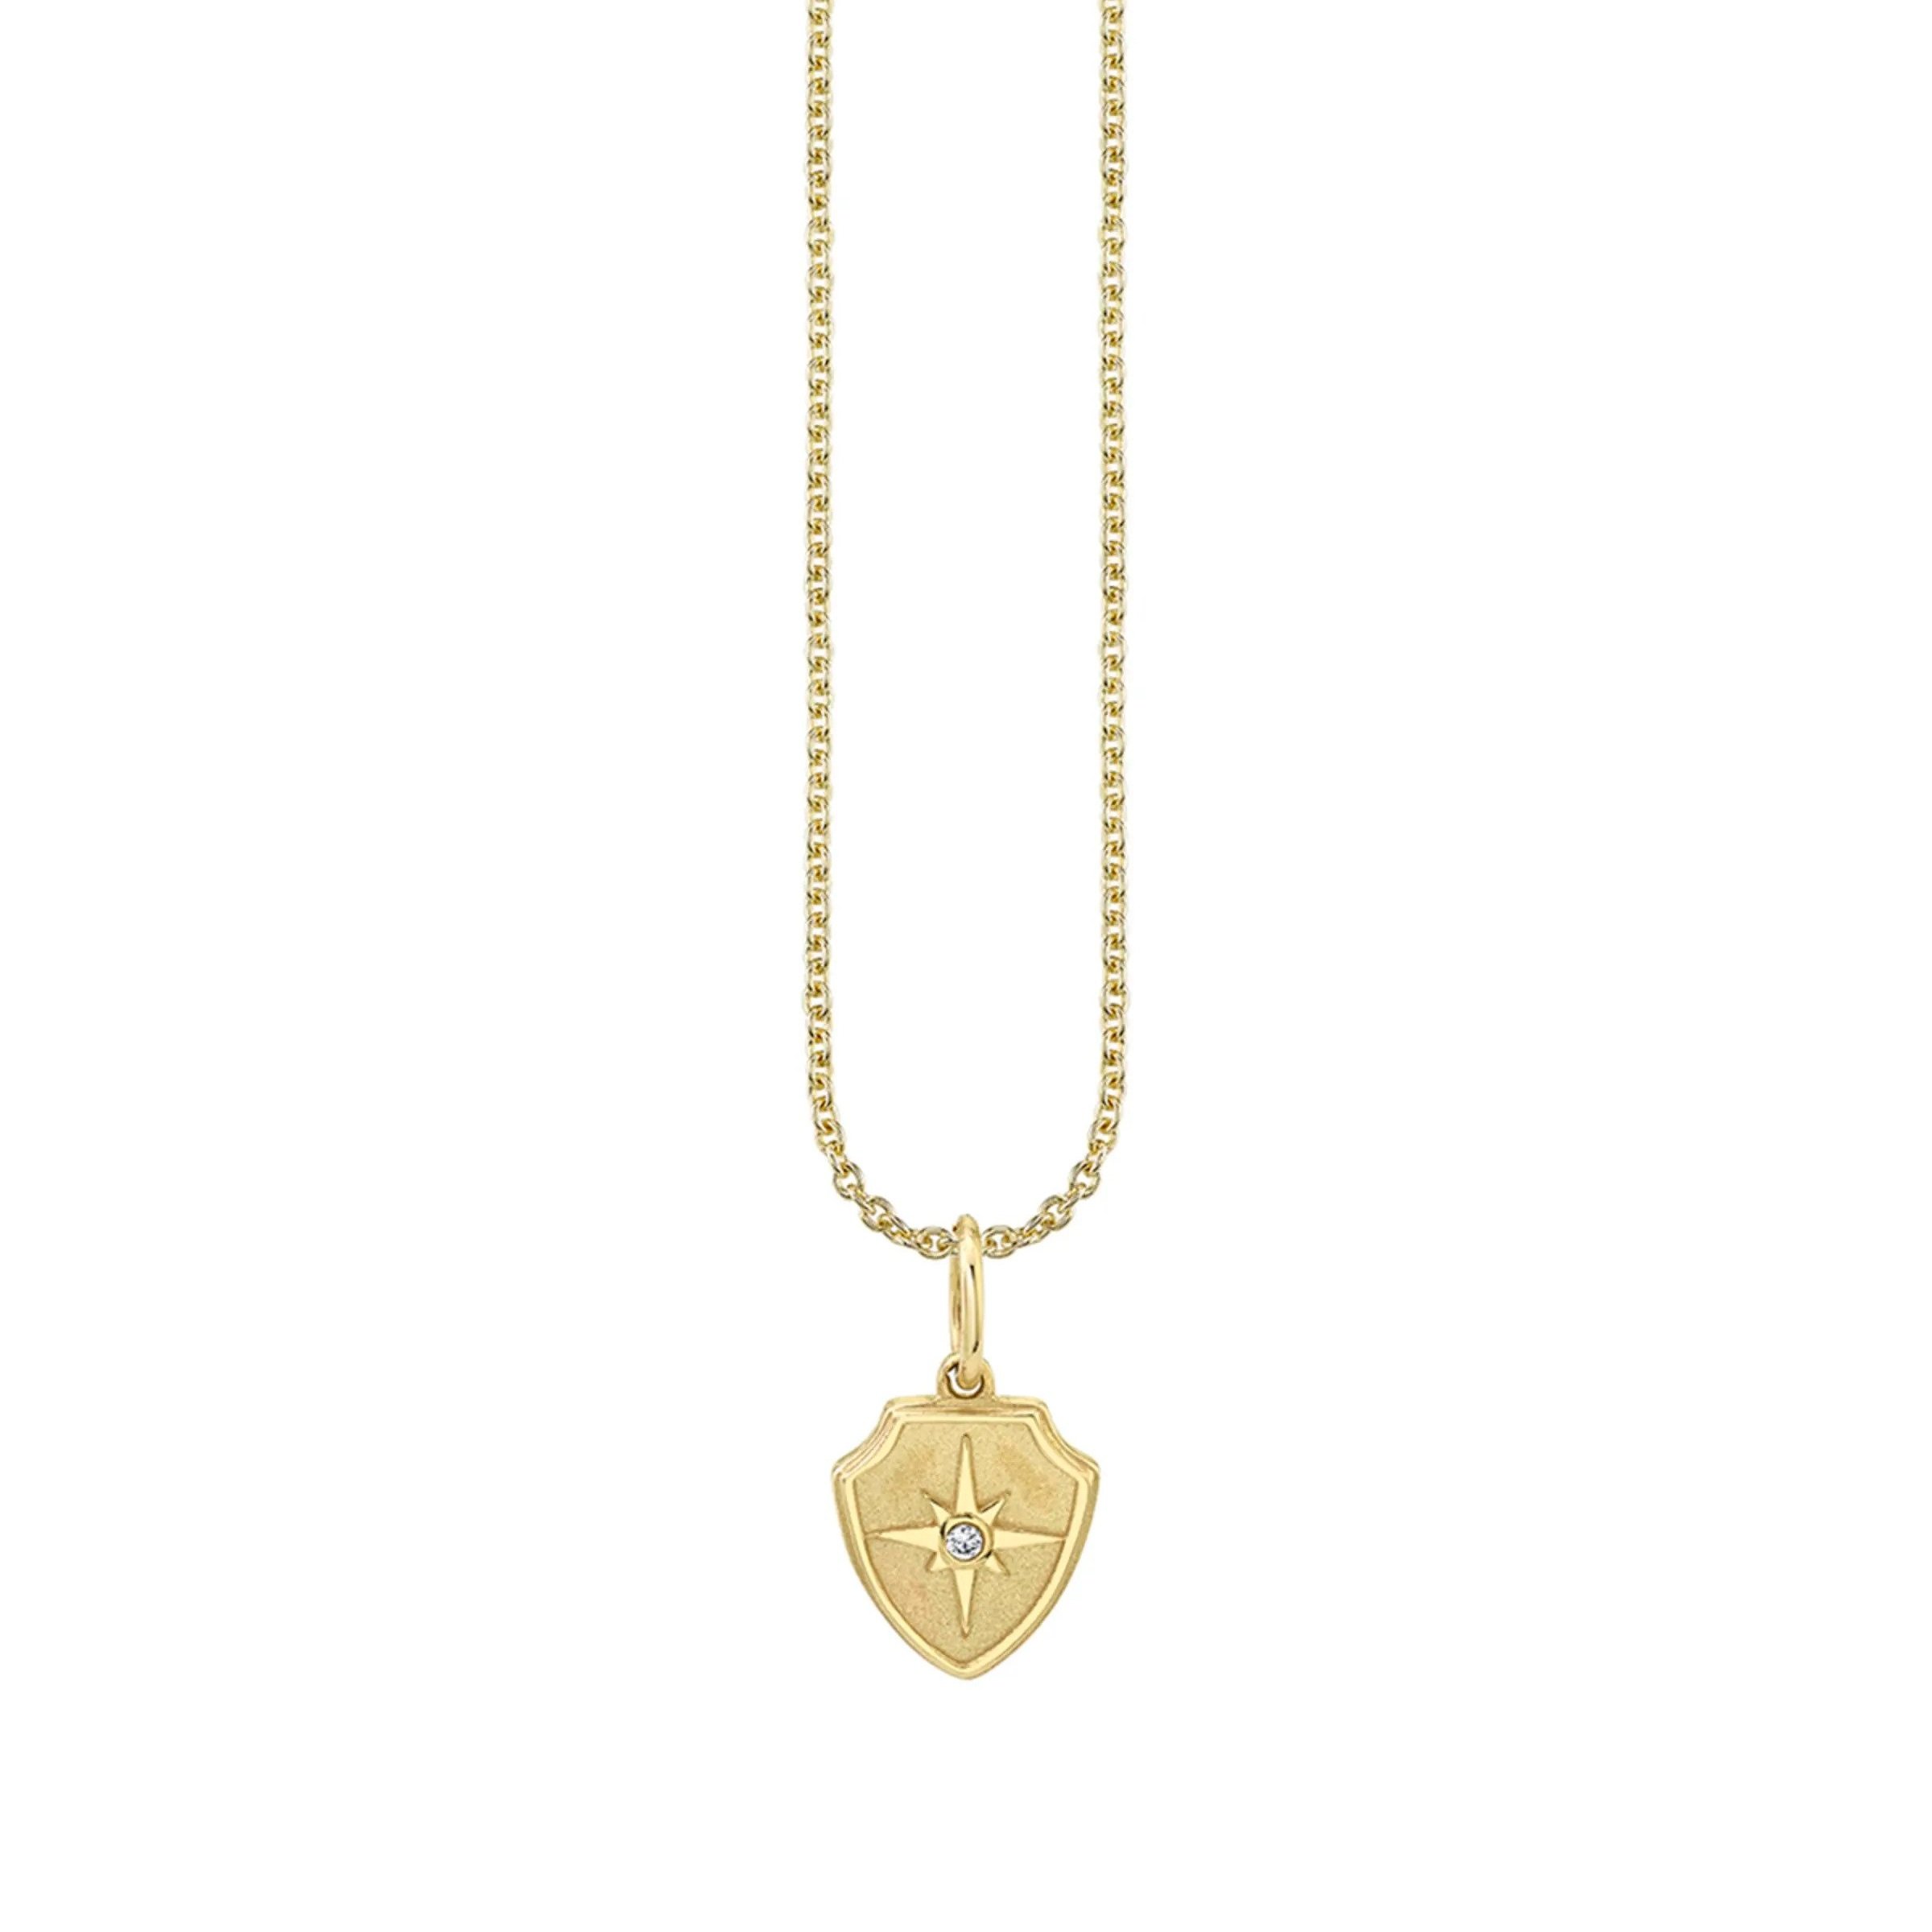 Sydney Evan 14k gold "Starburst Crest" pendant, $495 at Neiman Marcus